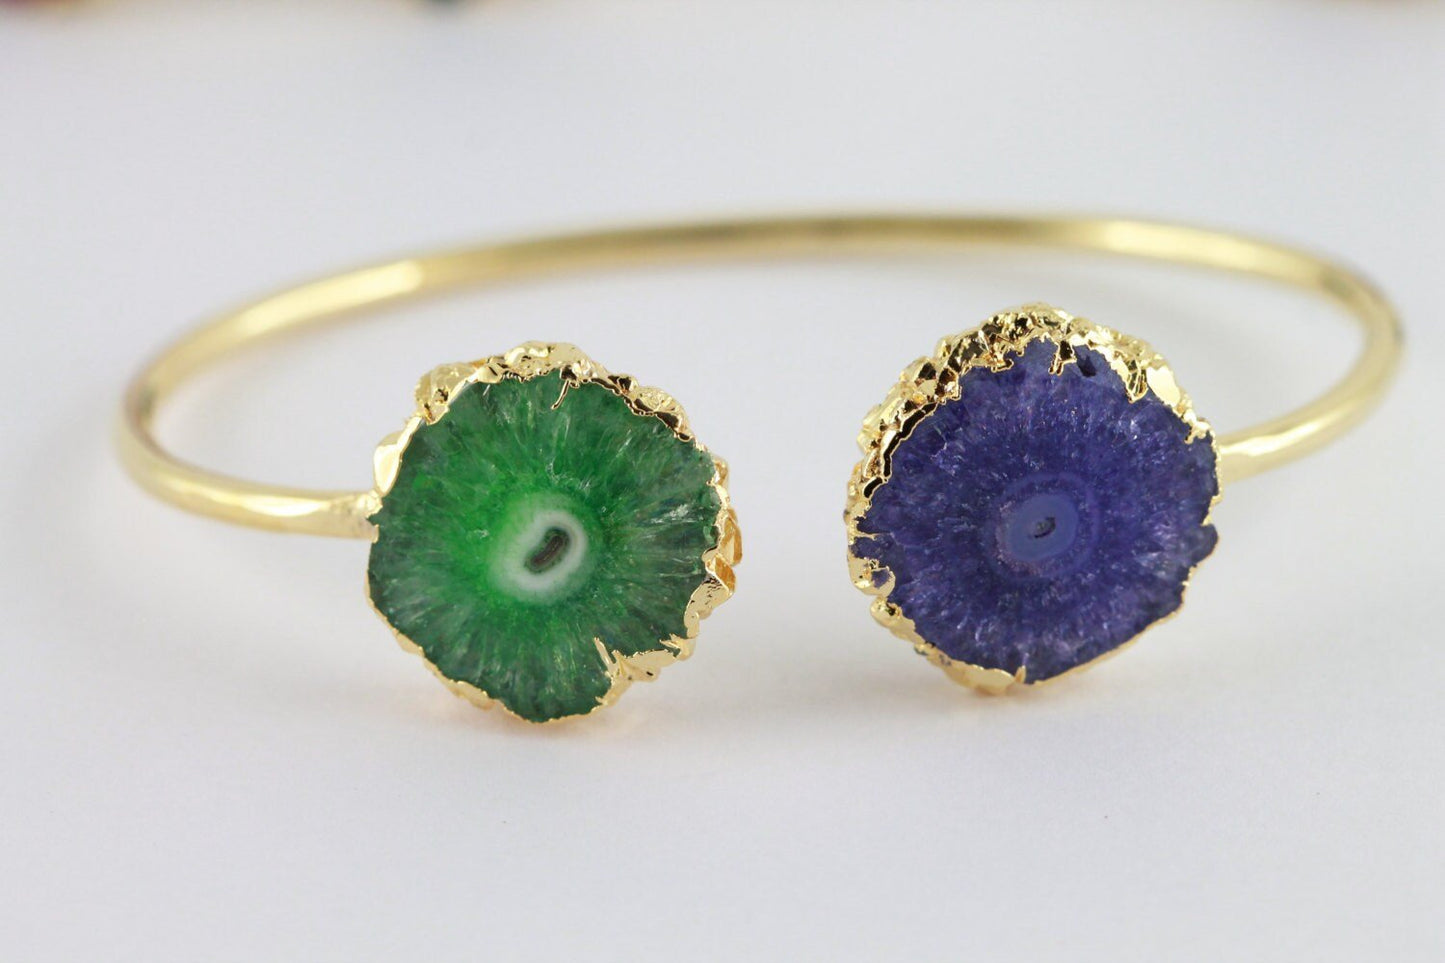 Bracelets Natural Gemstones Solar Quartz, Gemstone Bracelet, Druzy Bracelet, Gold Bracelet, Stackable, Adjustable - Meena Design